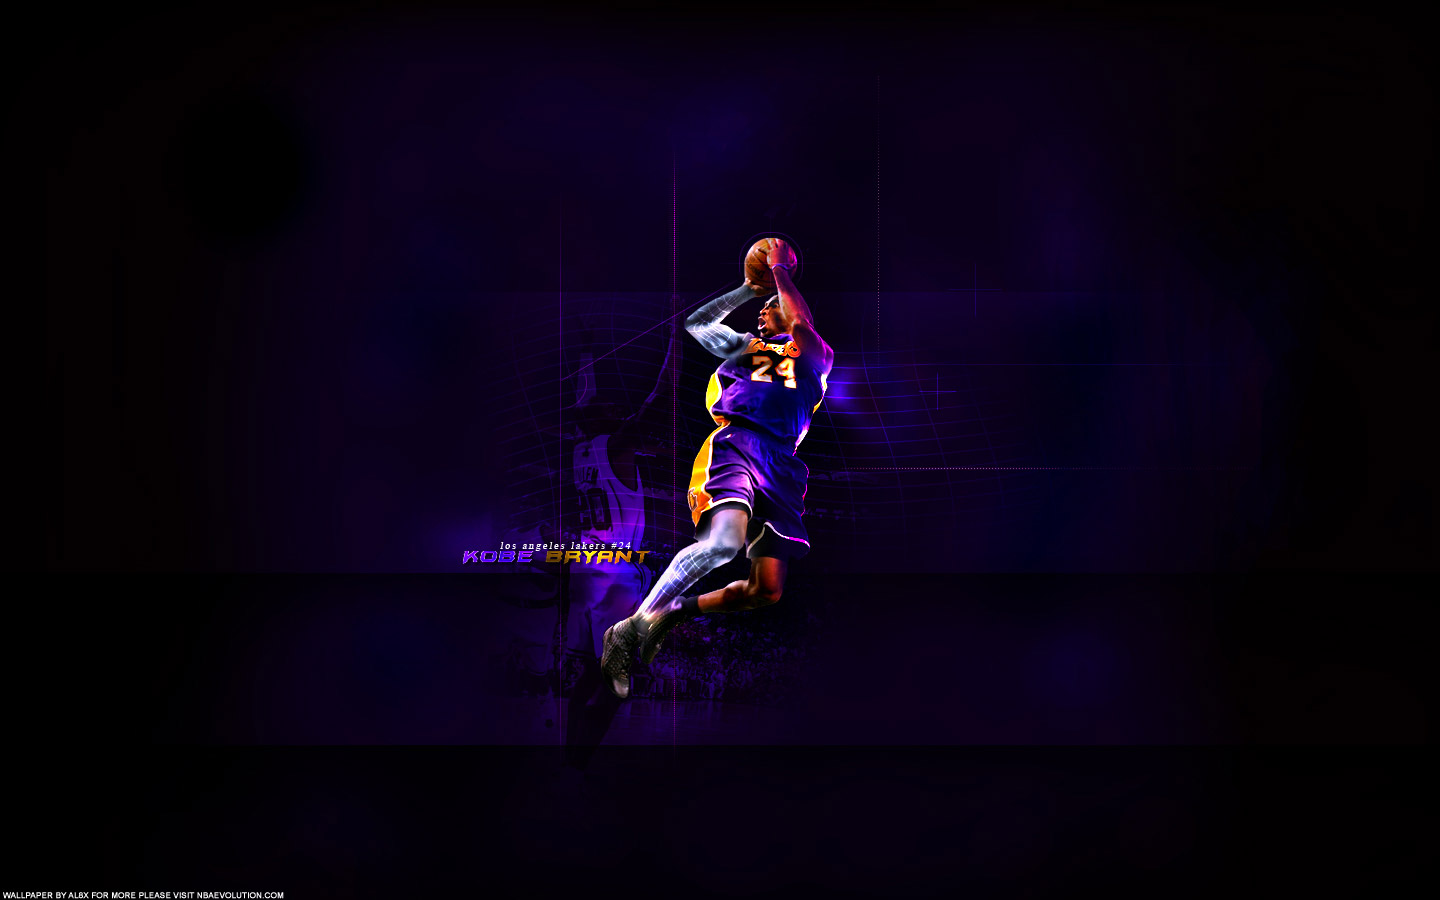 Kobe Bryant Basketball Wallpaper For Android